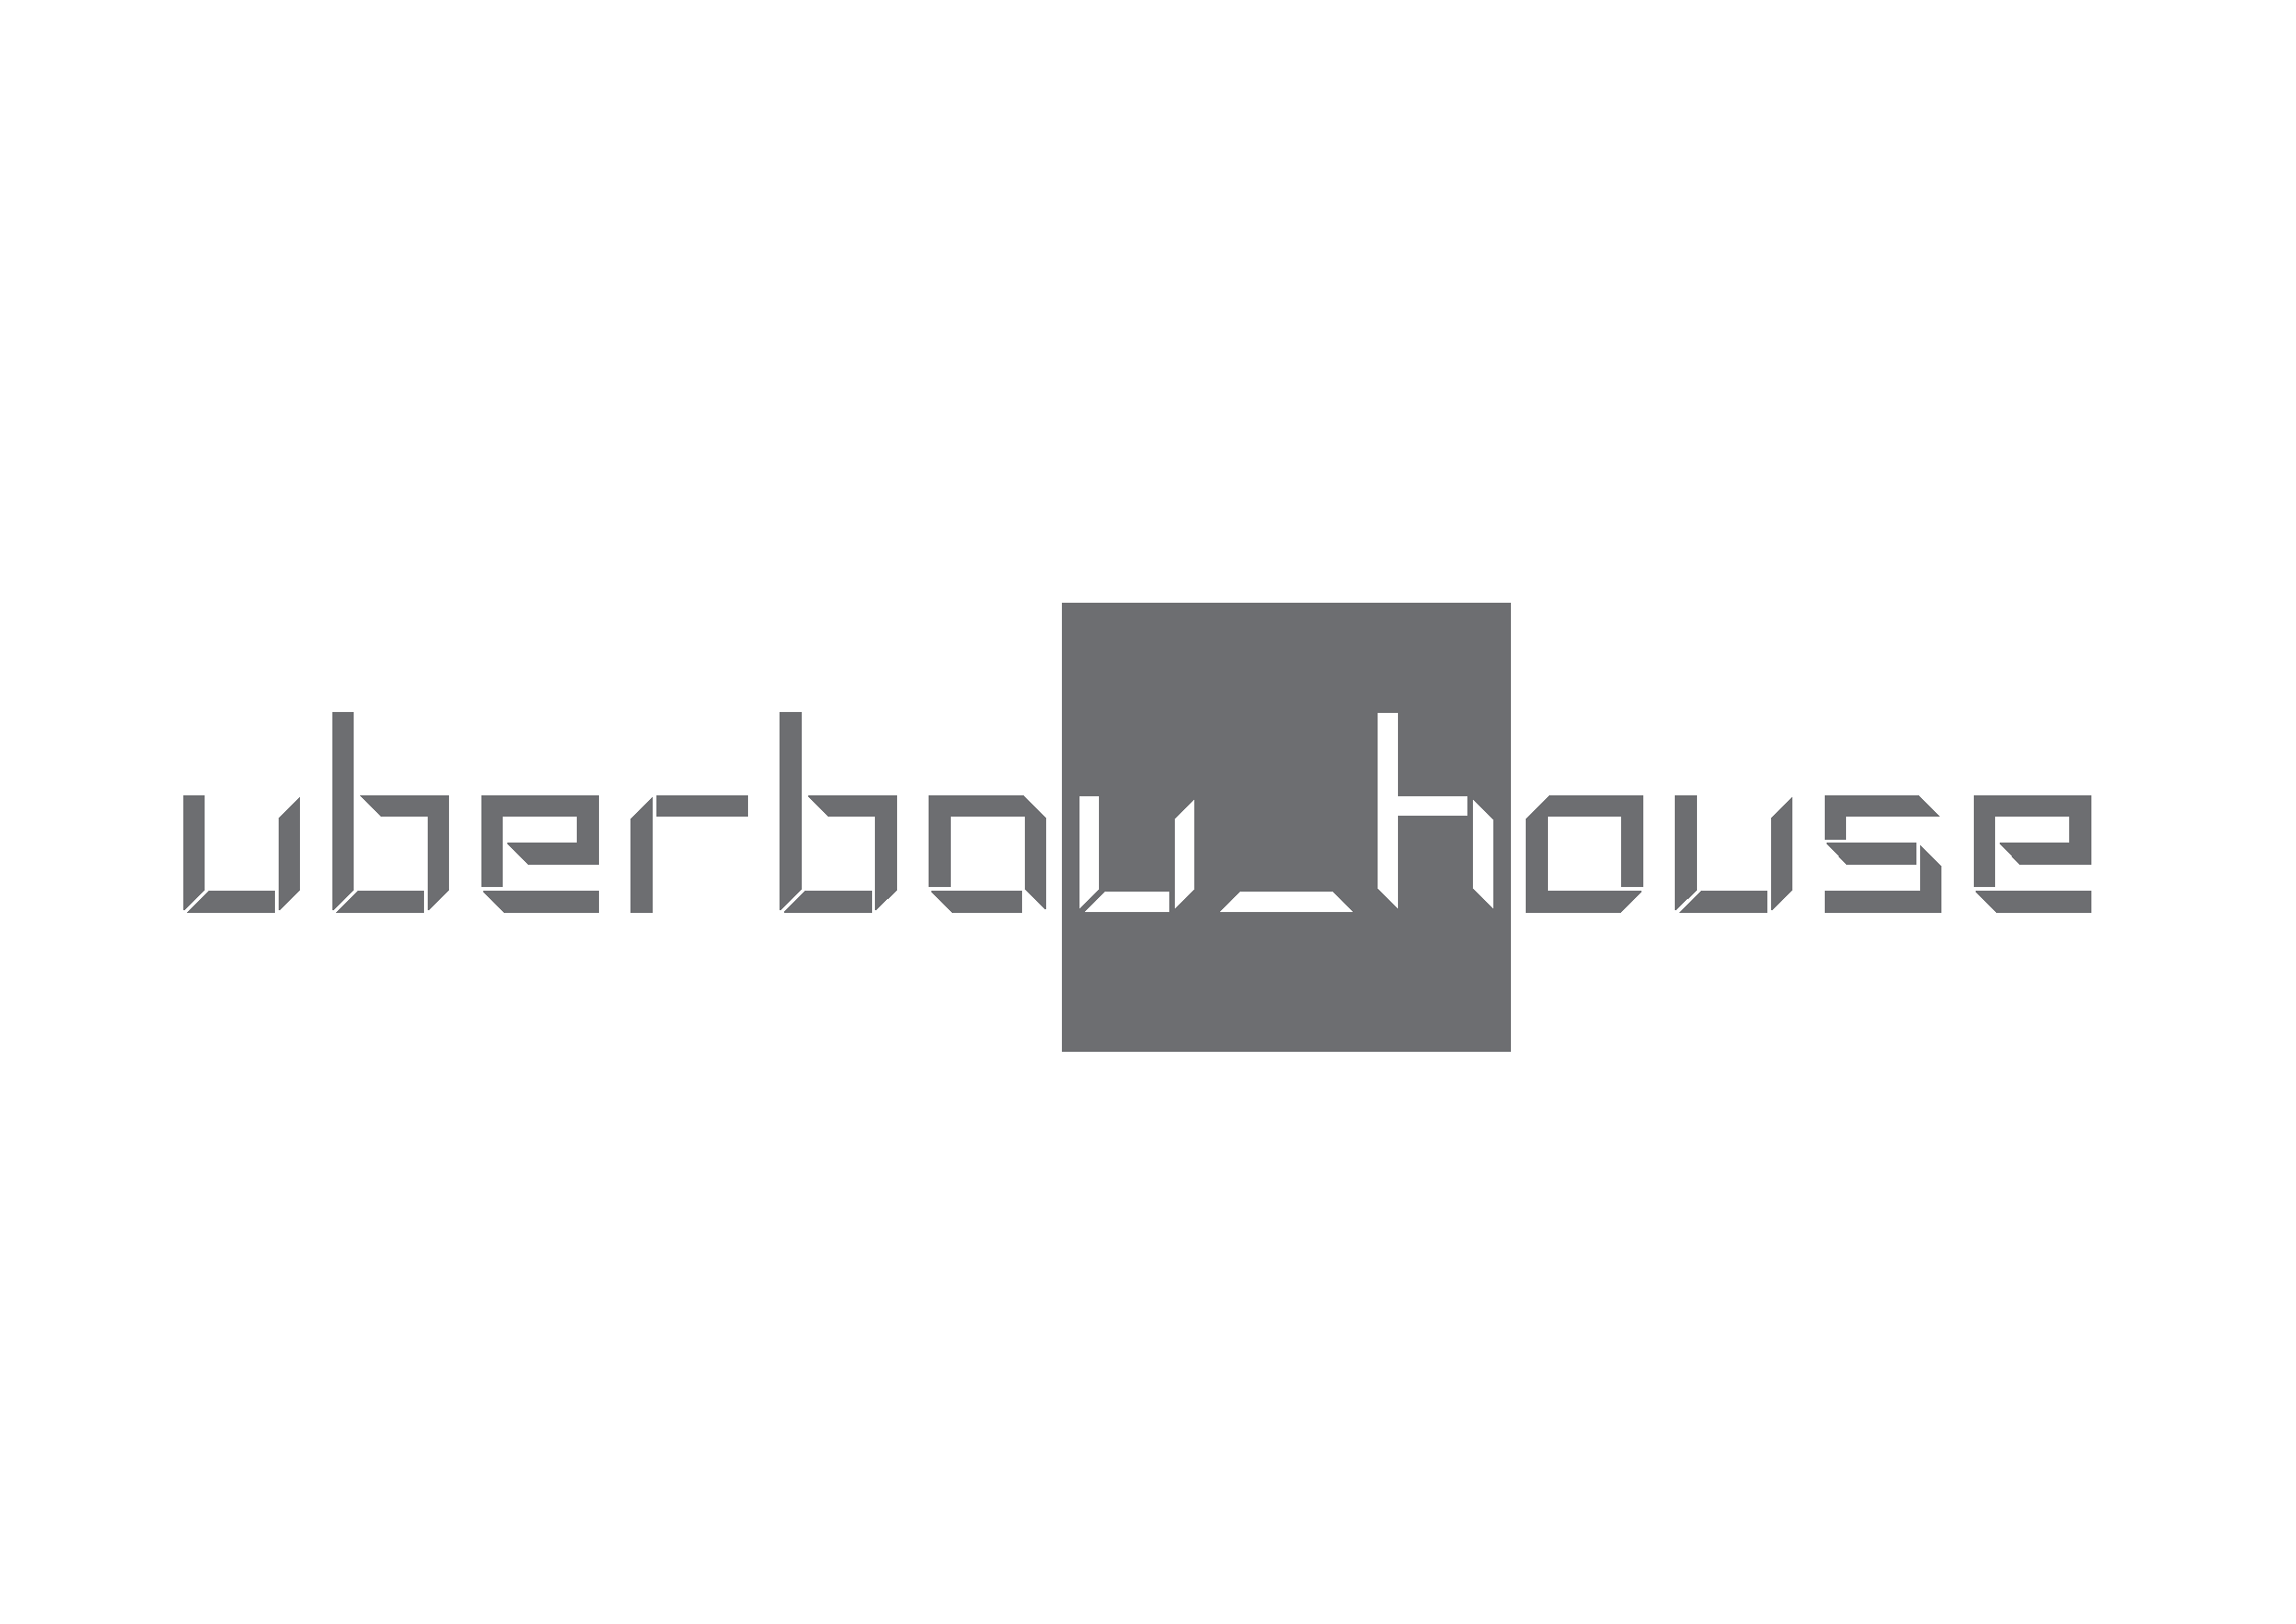 Uberbau_house